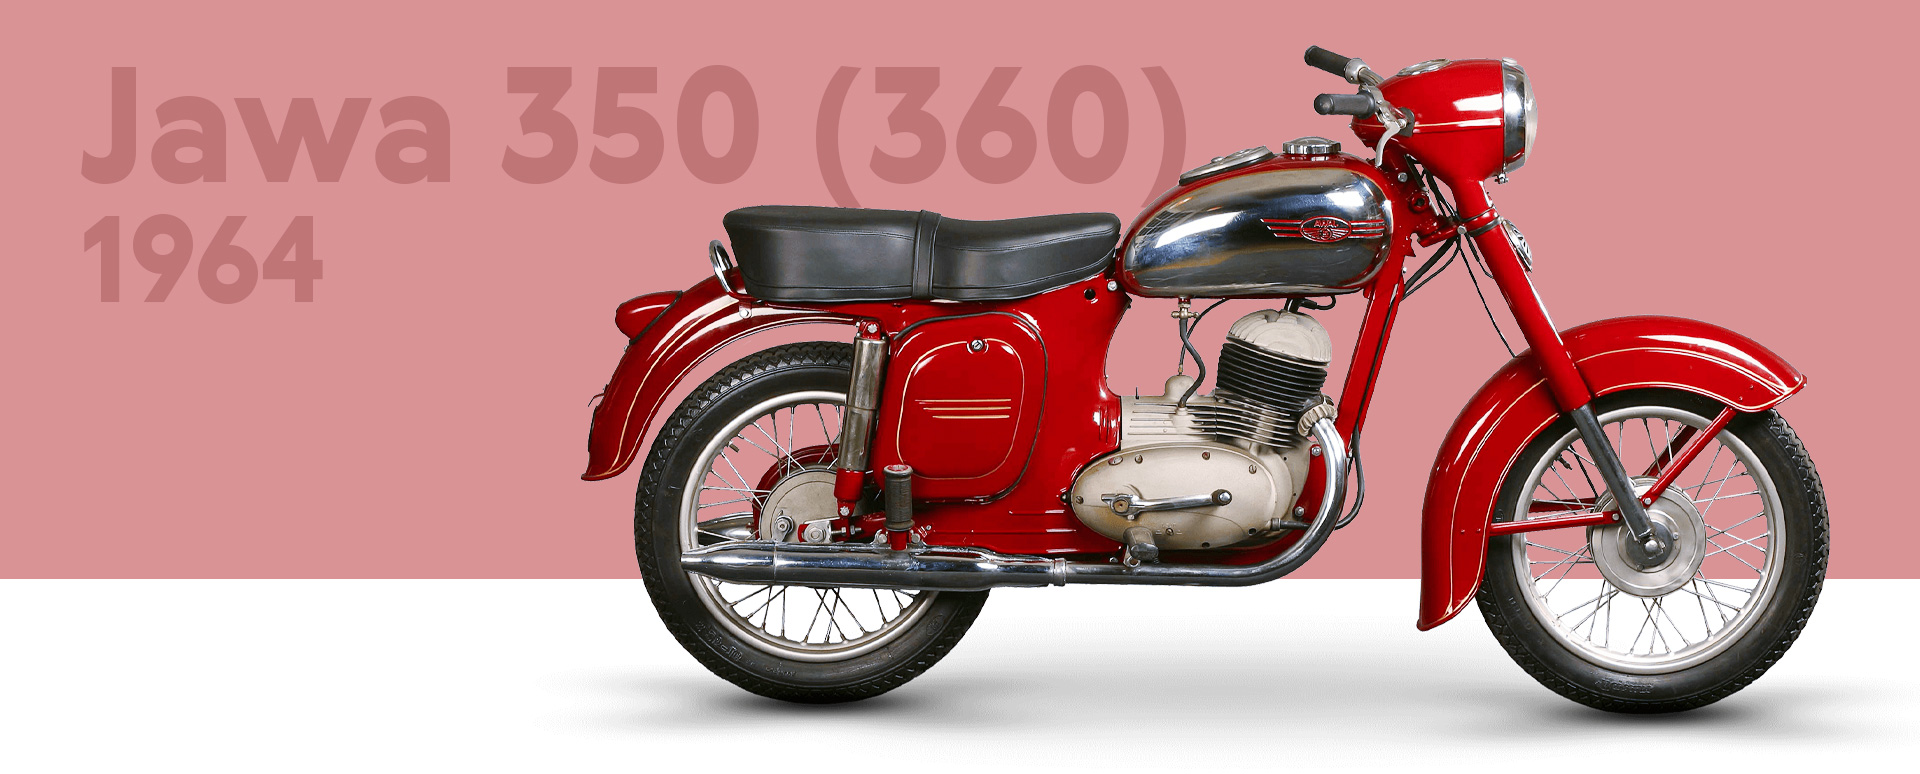 Ява мотоцикл 1953